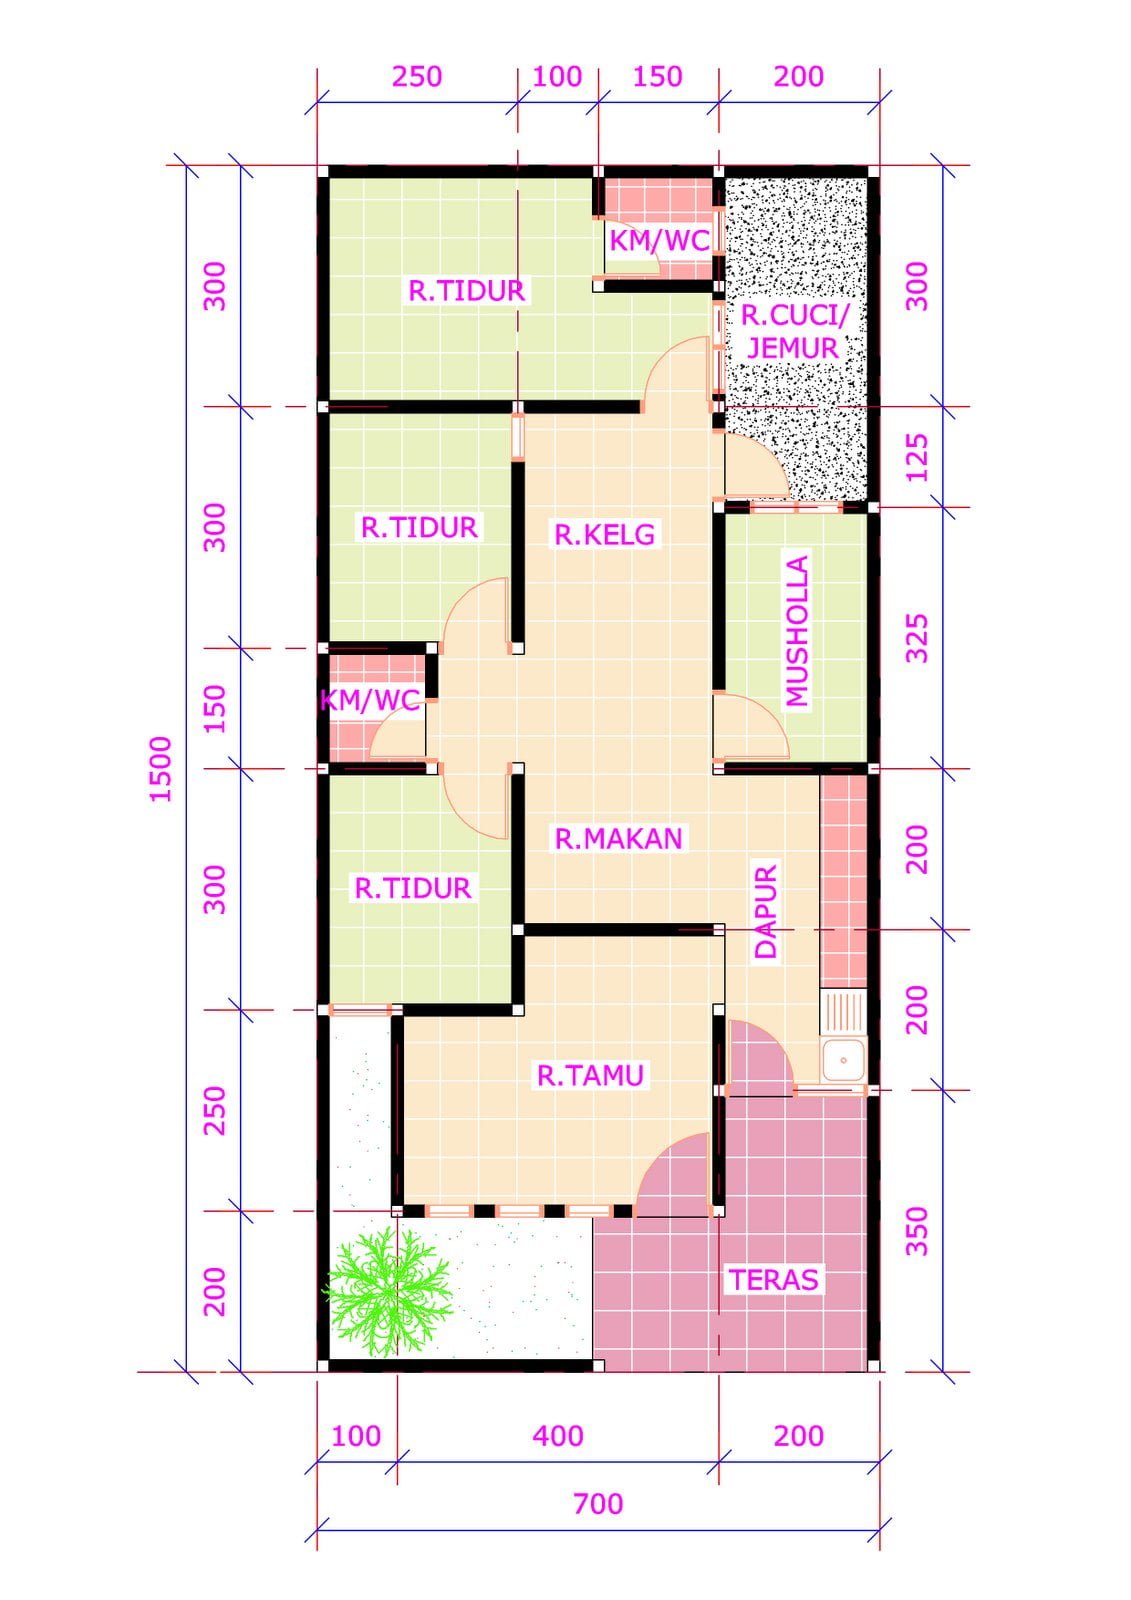 71 Kumpulan Desain Rumah Minimalis 3 Kamar 1 Mushola Terbaru dan Terlengkap